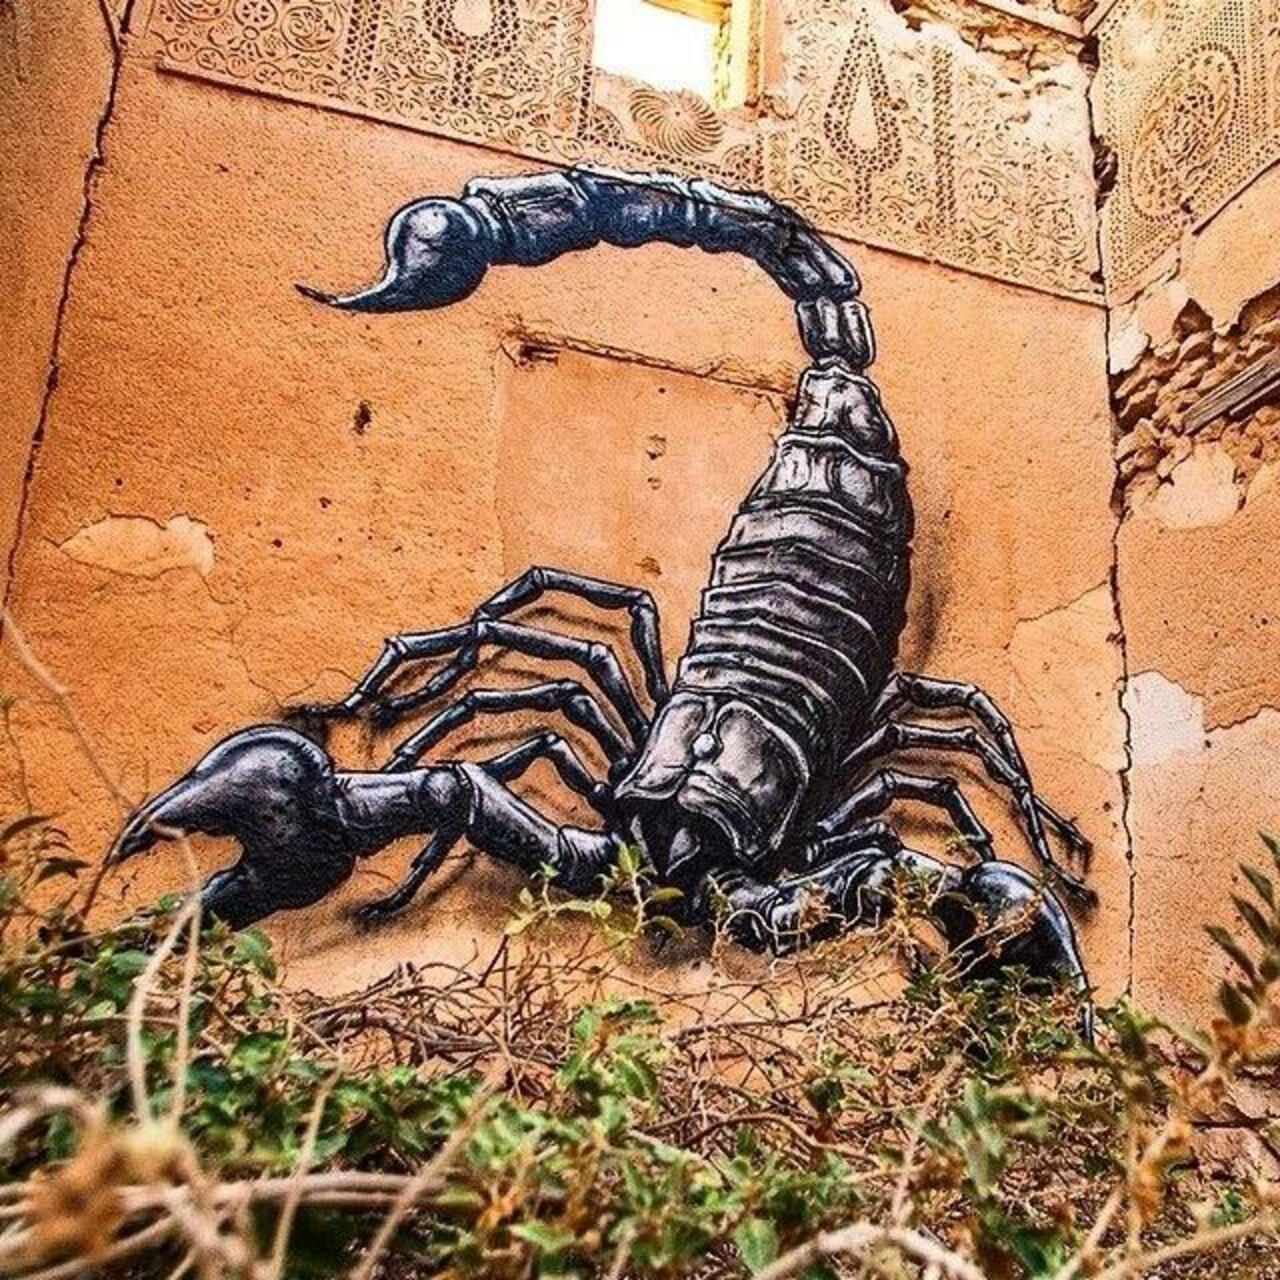 Artist ROA new Scorpion Street Art mural in Djerba, Tunisia #art #graffiti #nature #streetart http://t.co/6ETXP03IF0